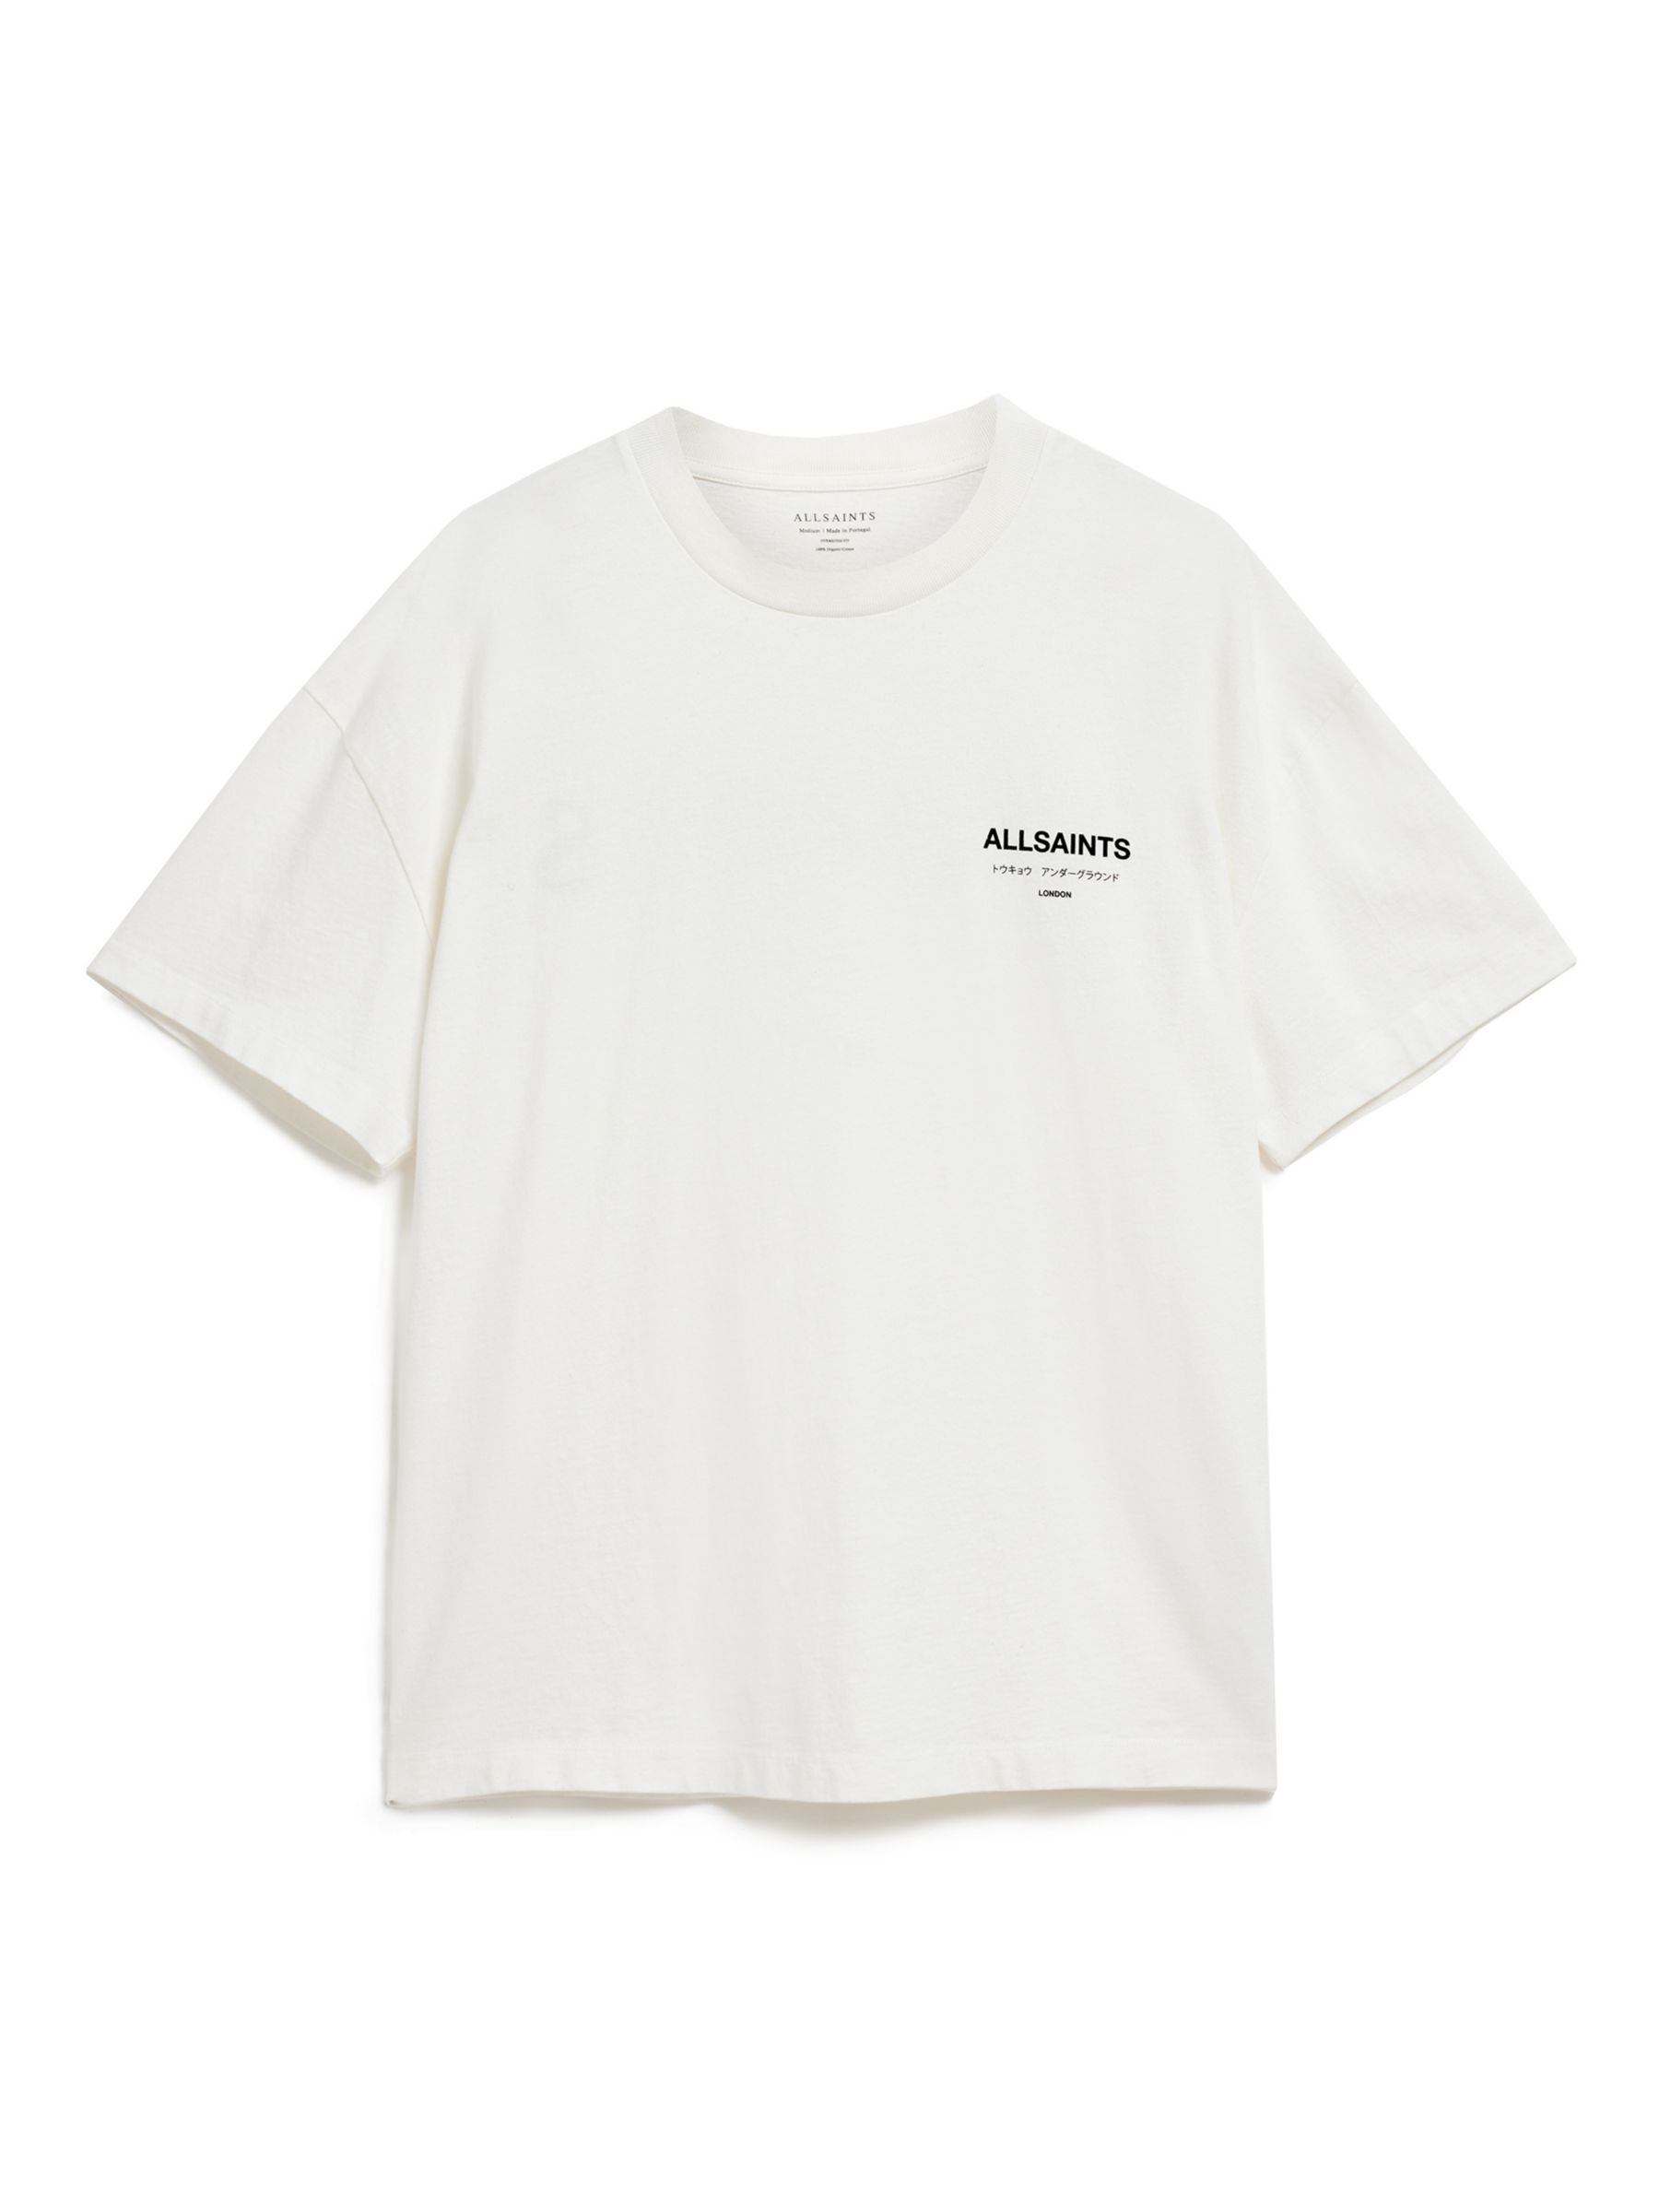 AllSaints Underground T-Shirt, Ashen White at John Lewis & Partners